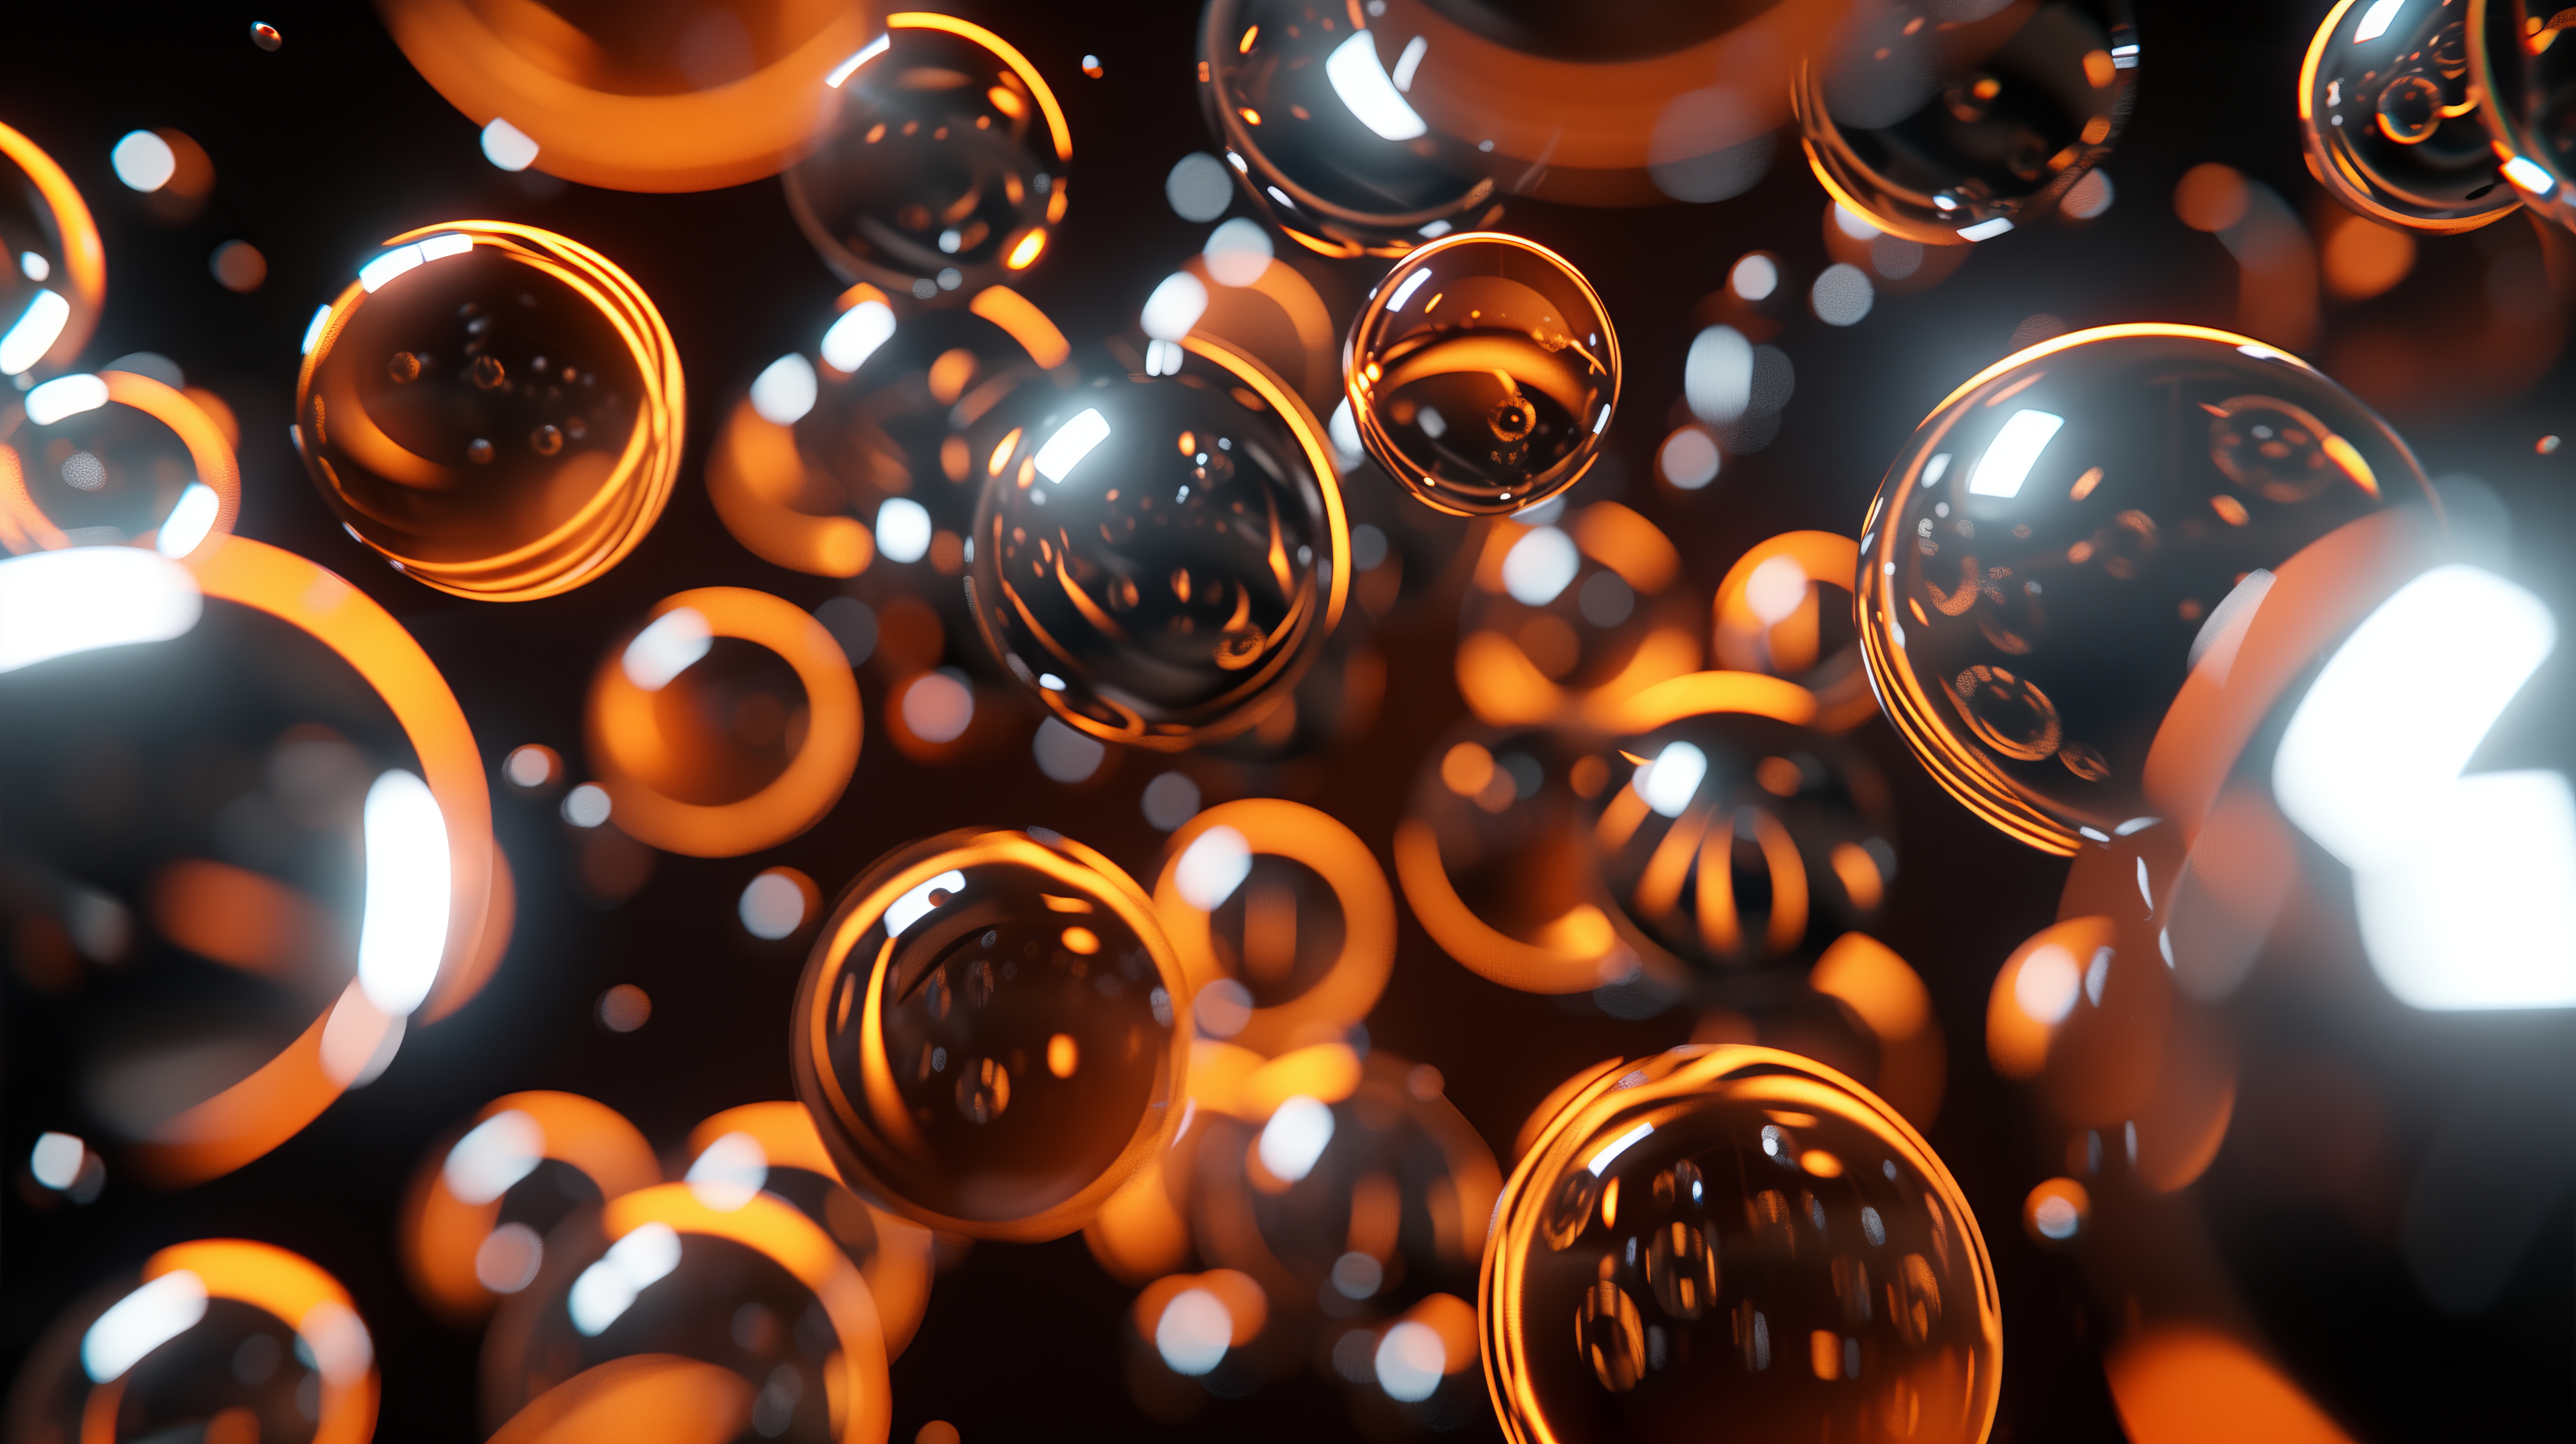 General 5824x3264 AI art 3D Abstract orange white black 8-ball reflective sphere blurred CGI